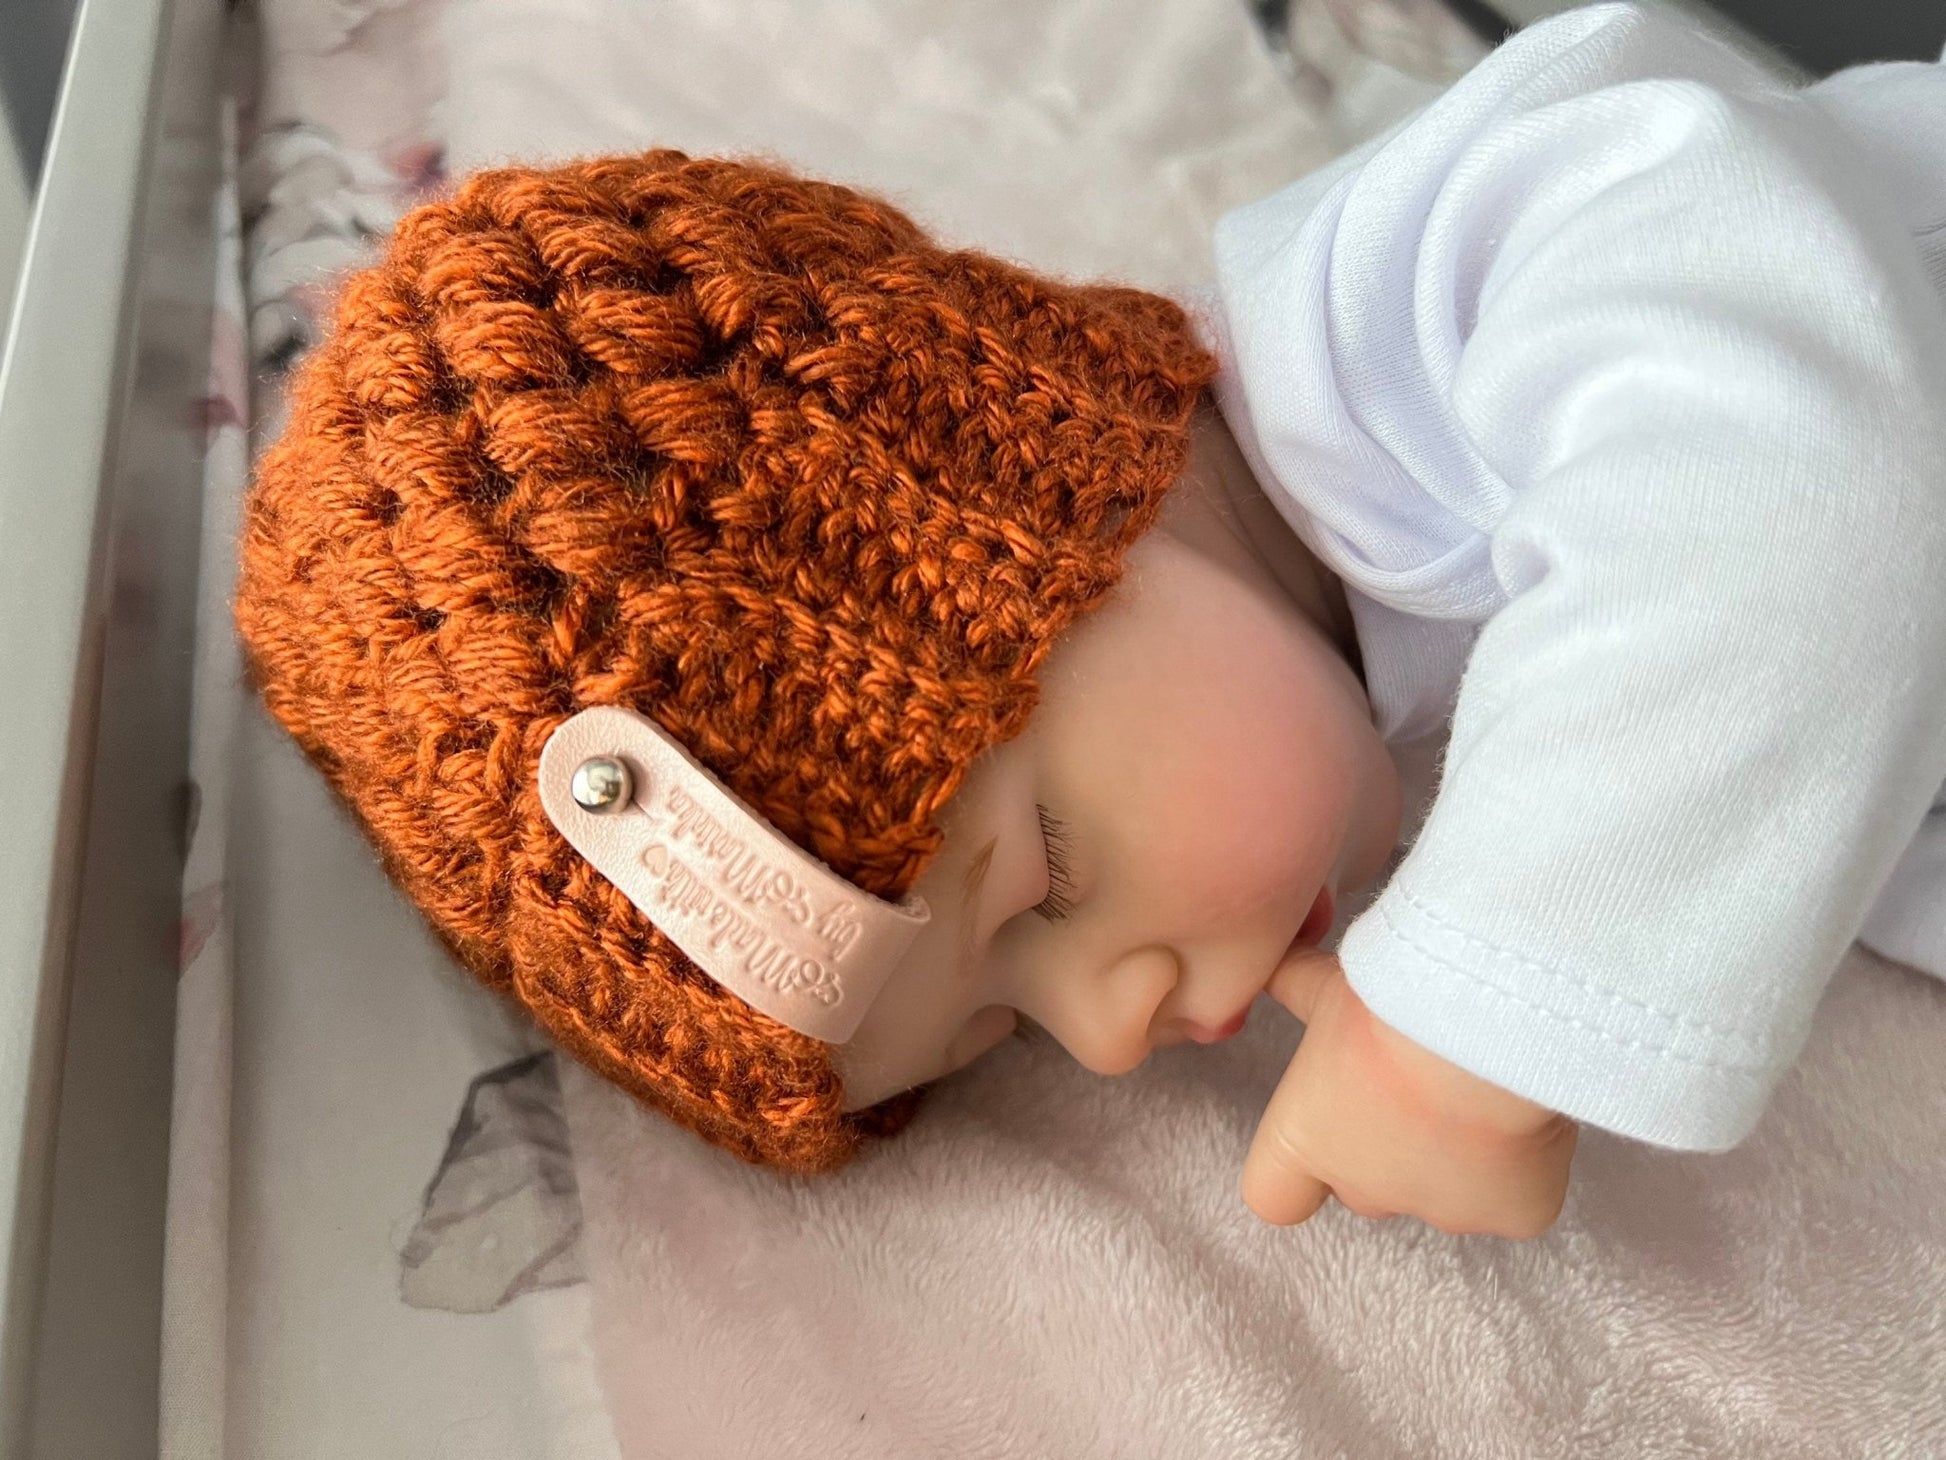 Choosing Yarn for Baby Hats